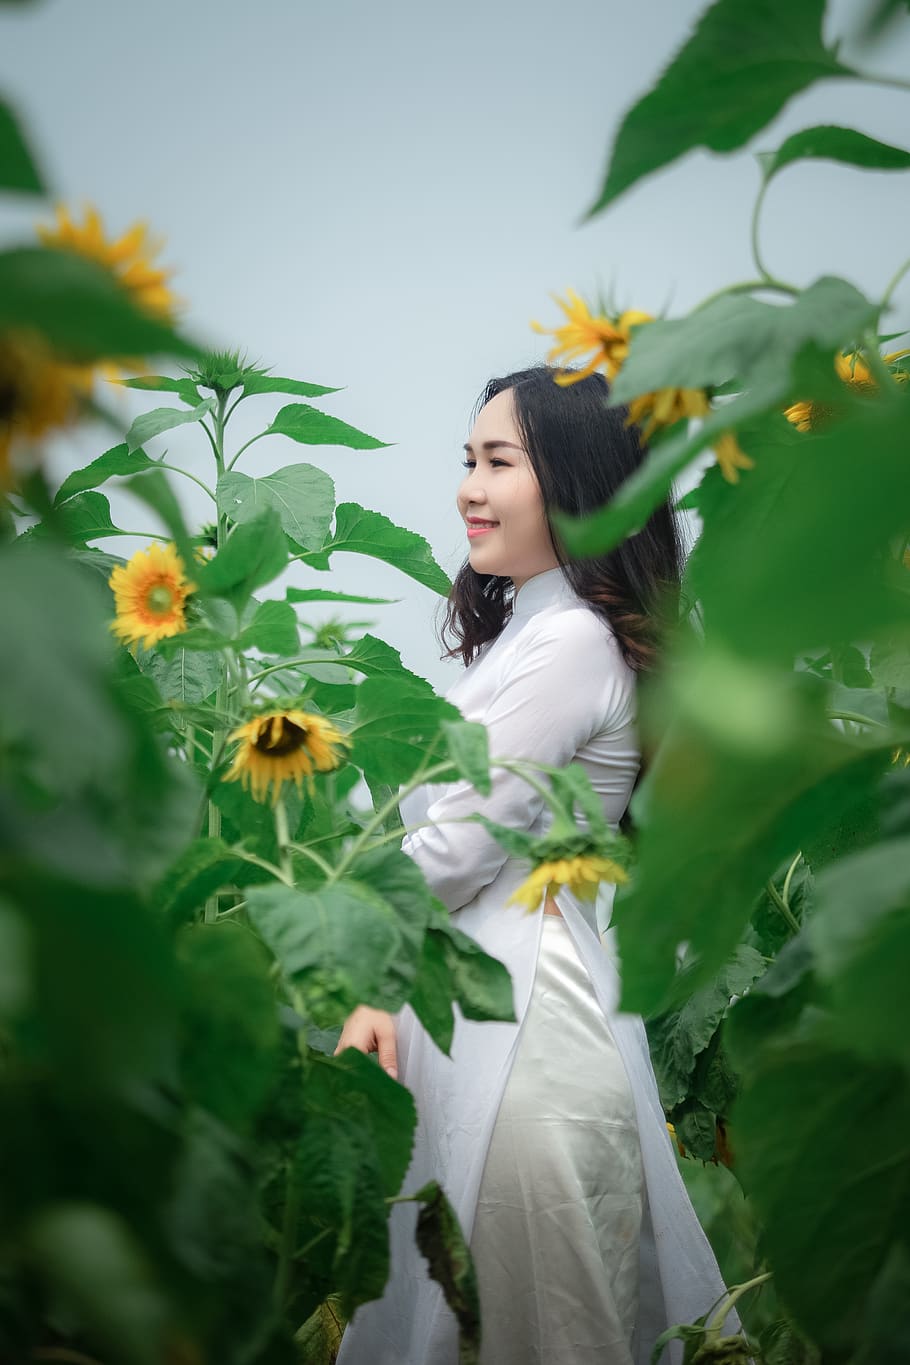 Woman in White Dress Standing on Sunflower Field, ao dai, beautiful